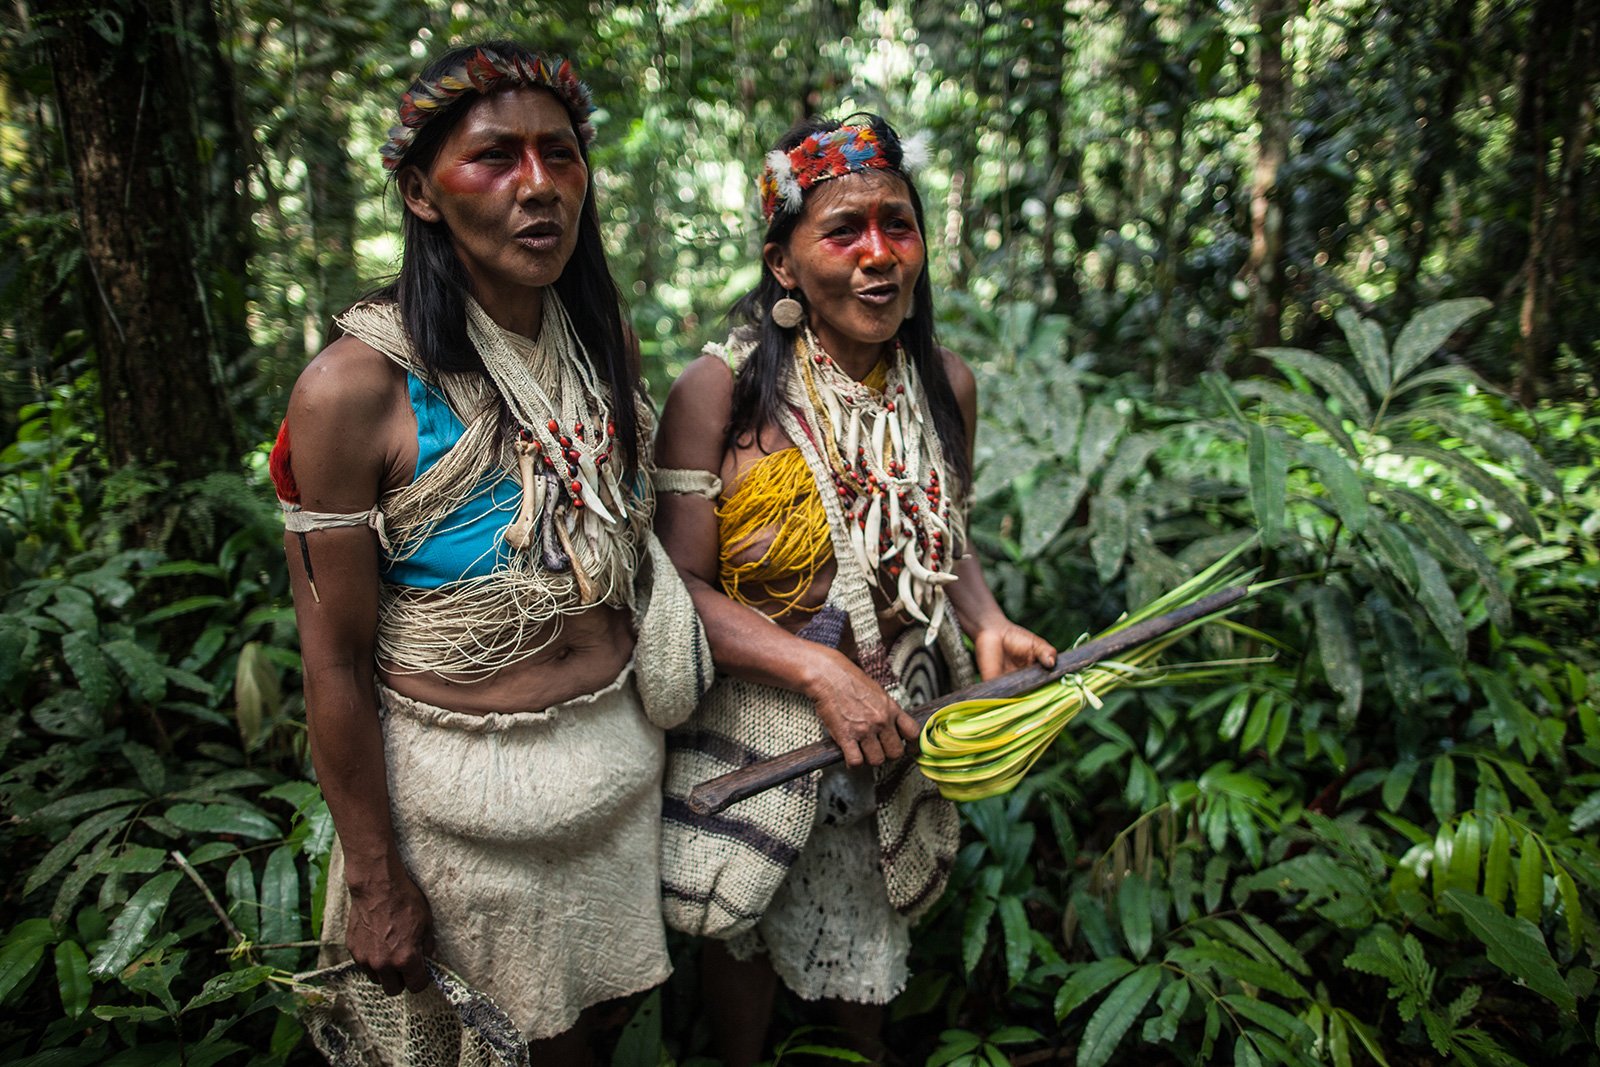 Waorani women sing in the forest in their ancestral territory in Pastaza region, Ecuadorian Amazon.